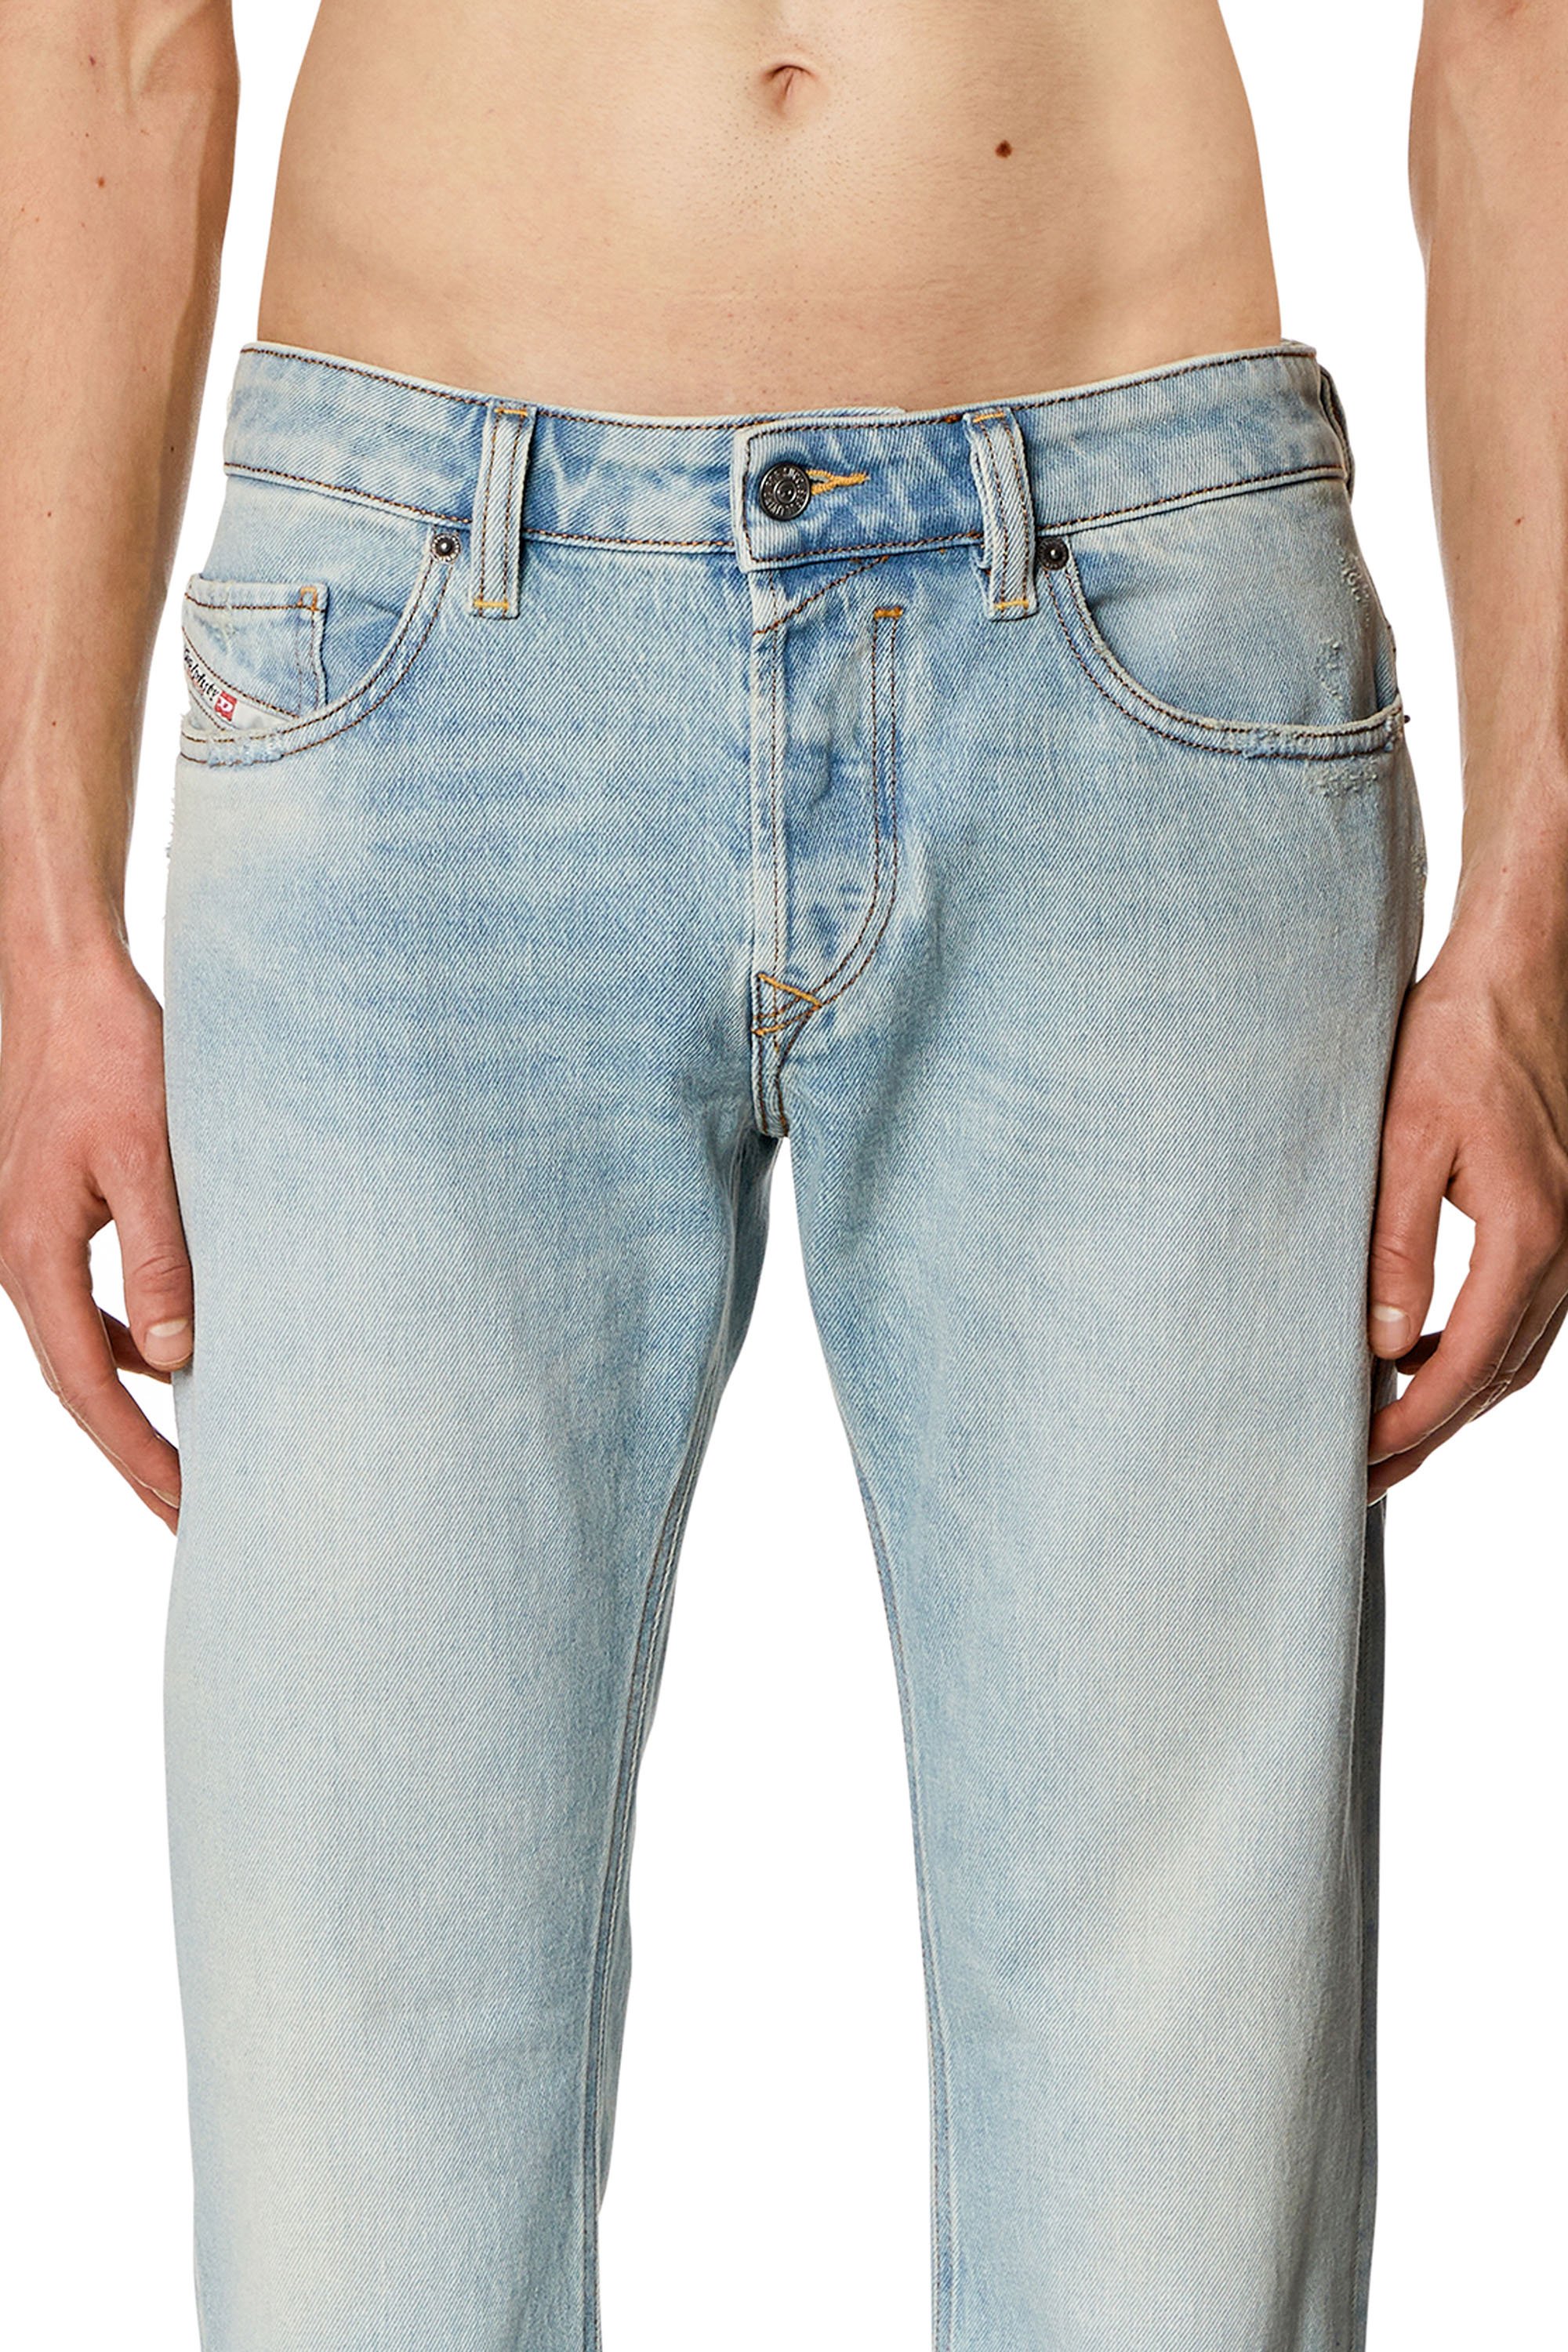 Men's Safado Jeans: Our Classic Straight Jeans | Diesel